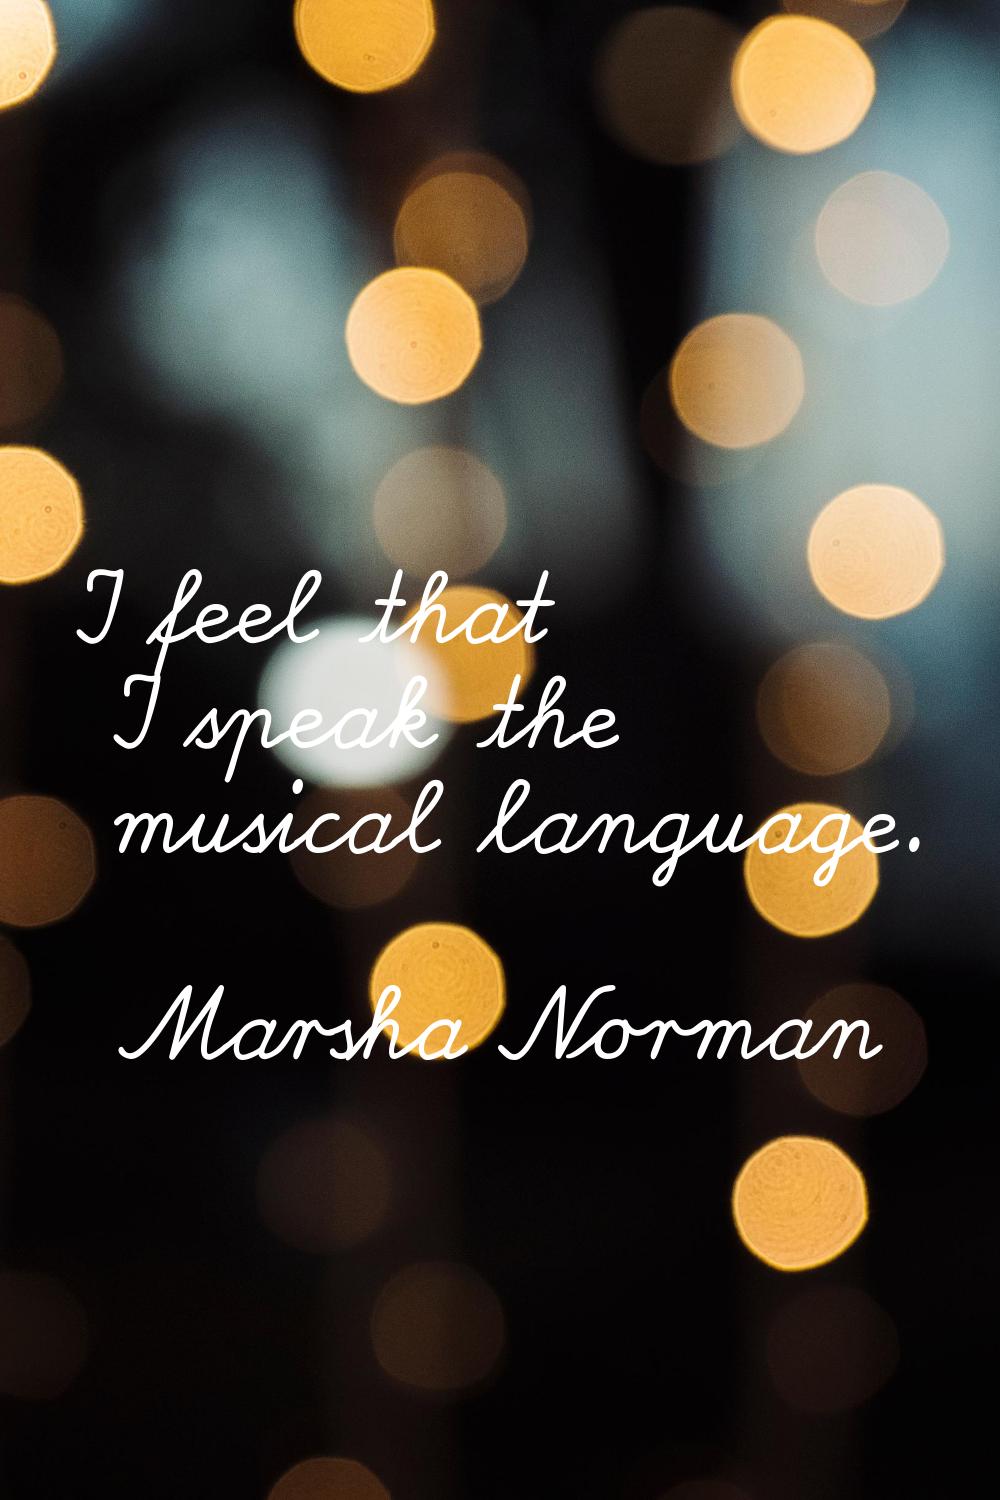 I feel that I speak the musical language.